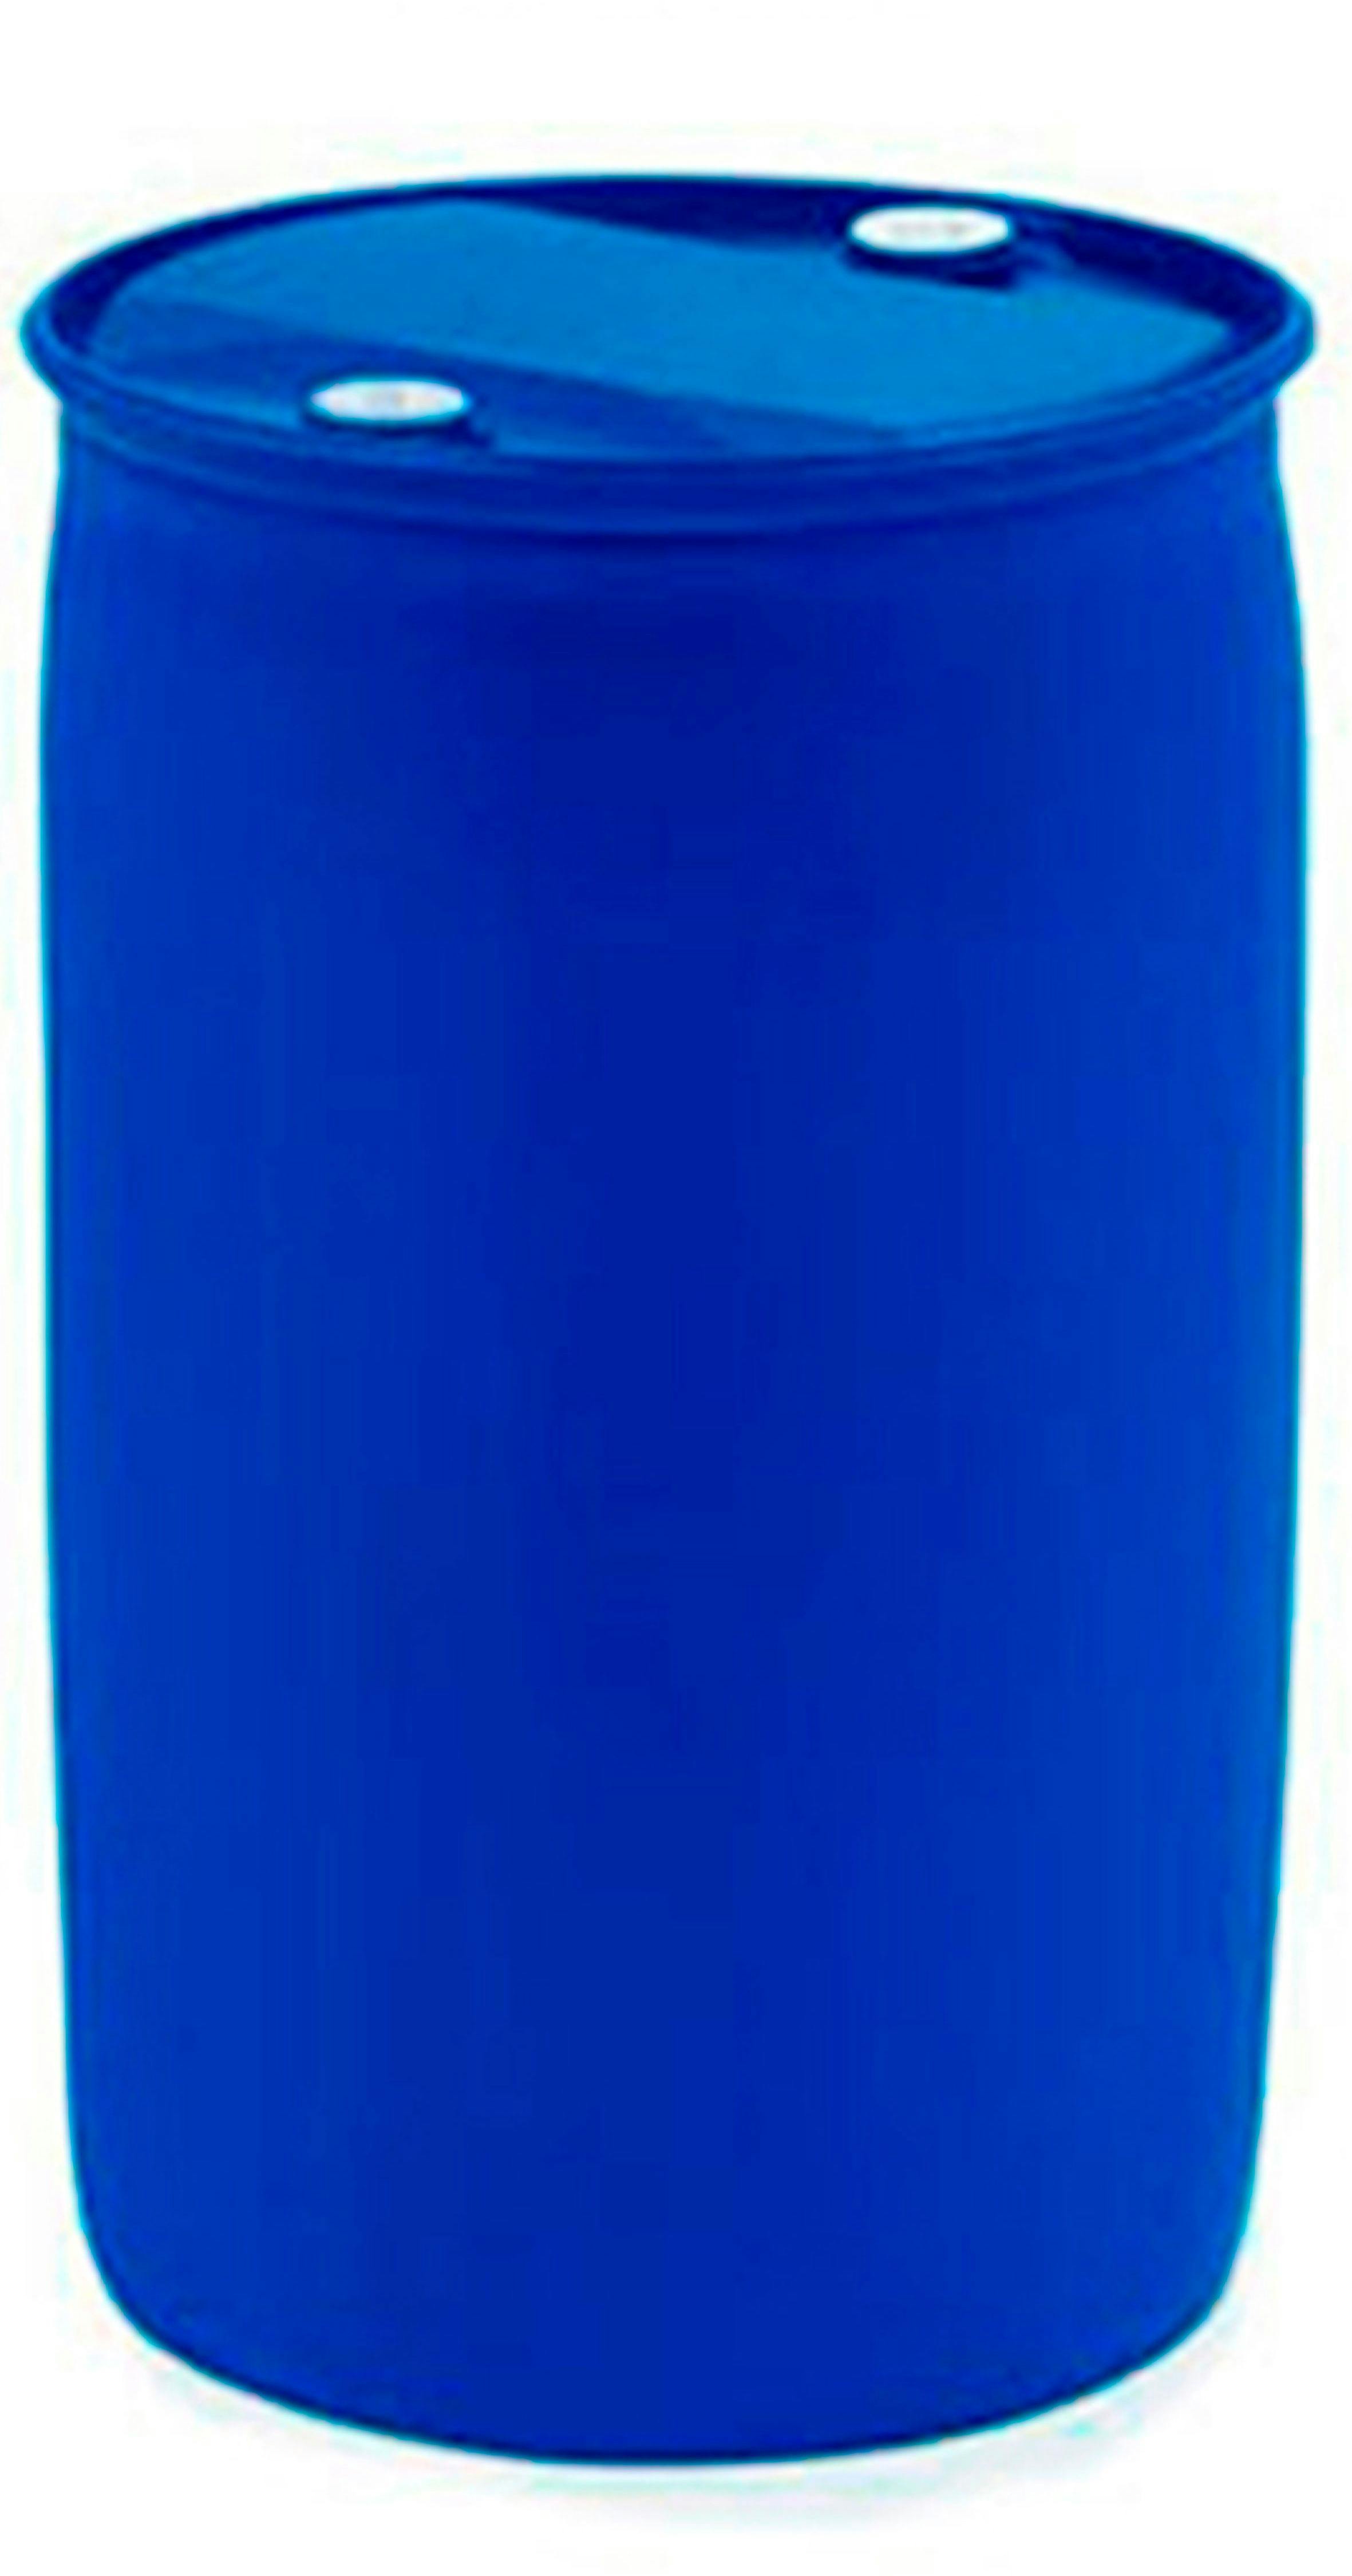 Drum cylindrical 220L BLUE 2 BOCAS  HOMOLOGATED